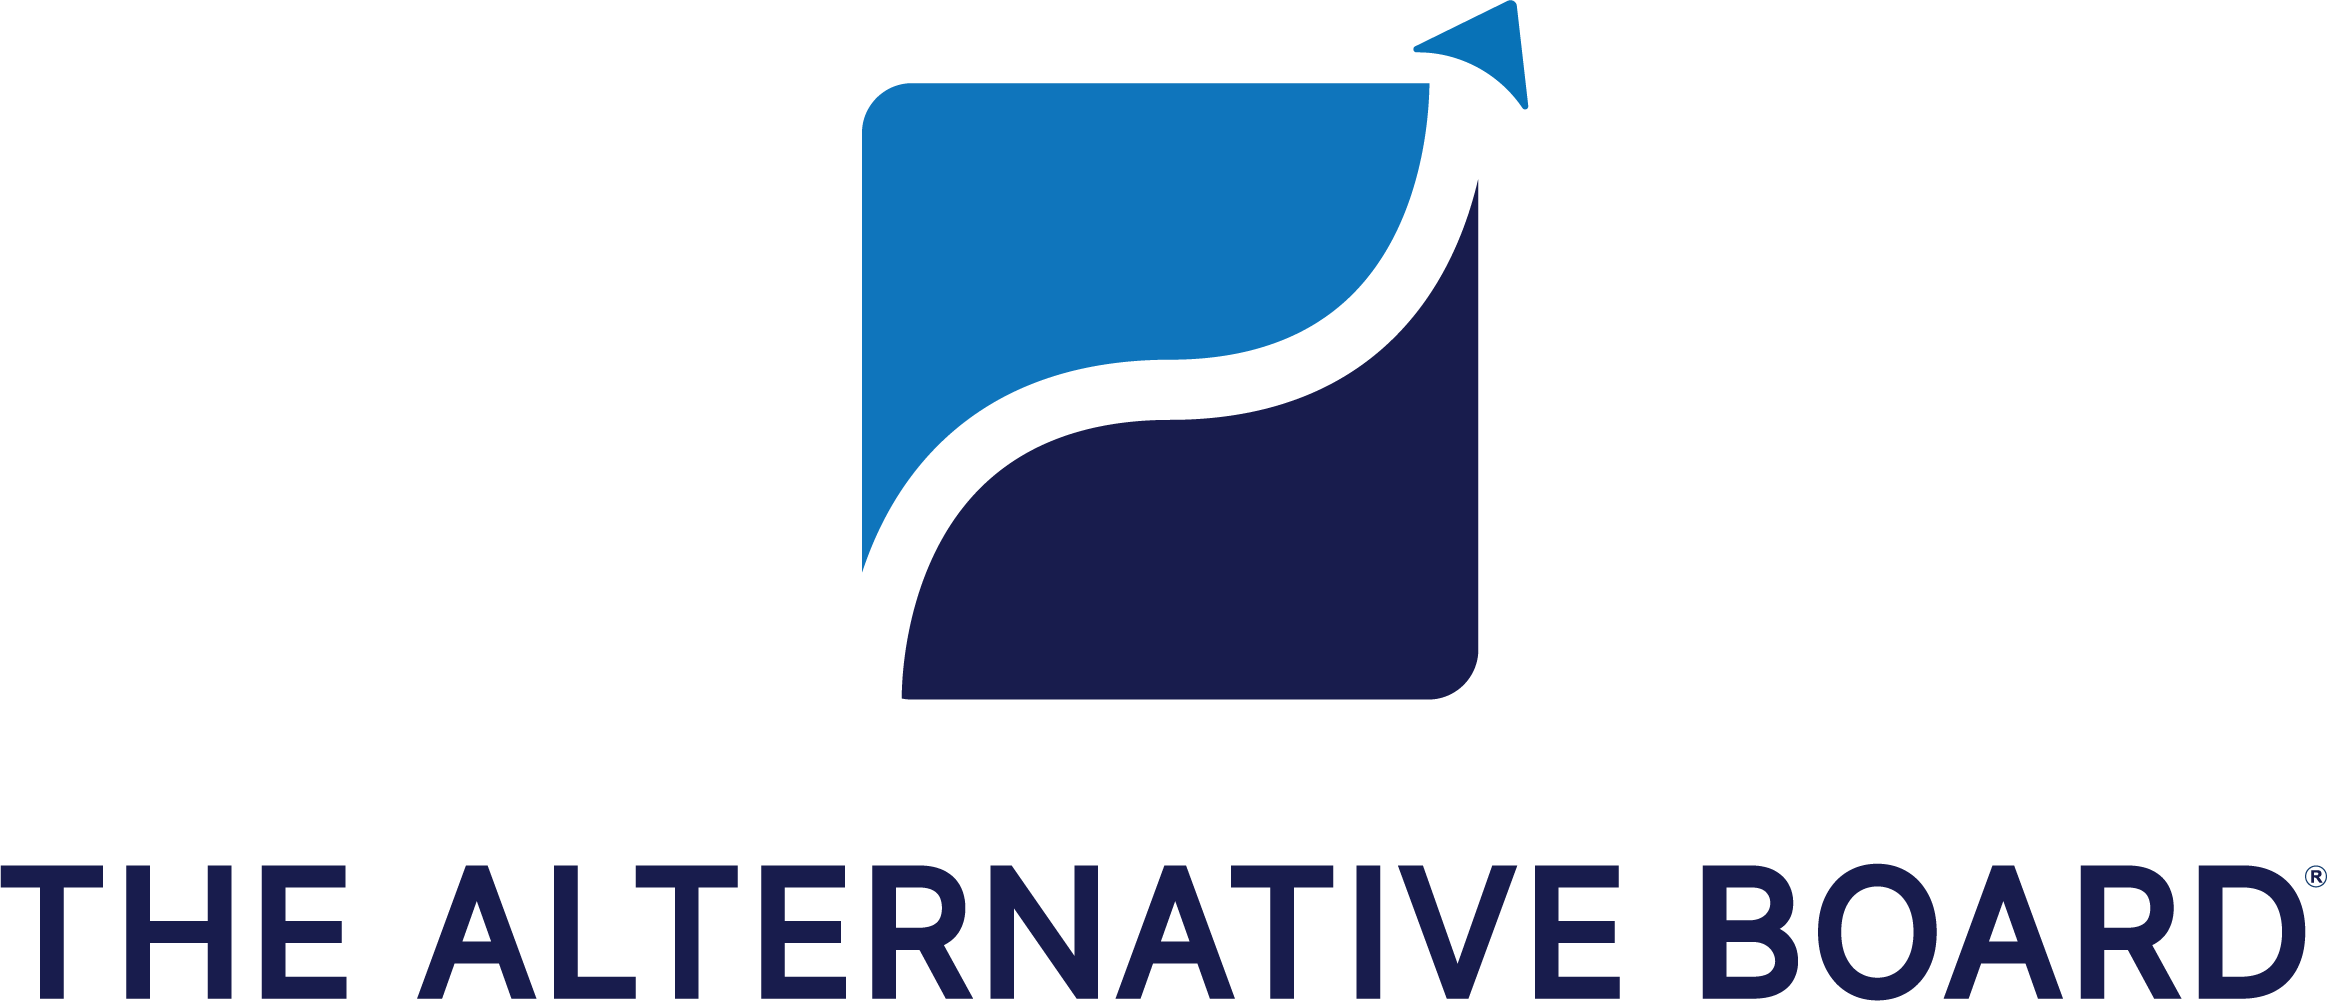 Territory Map | The Alternative Board Australia